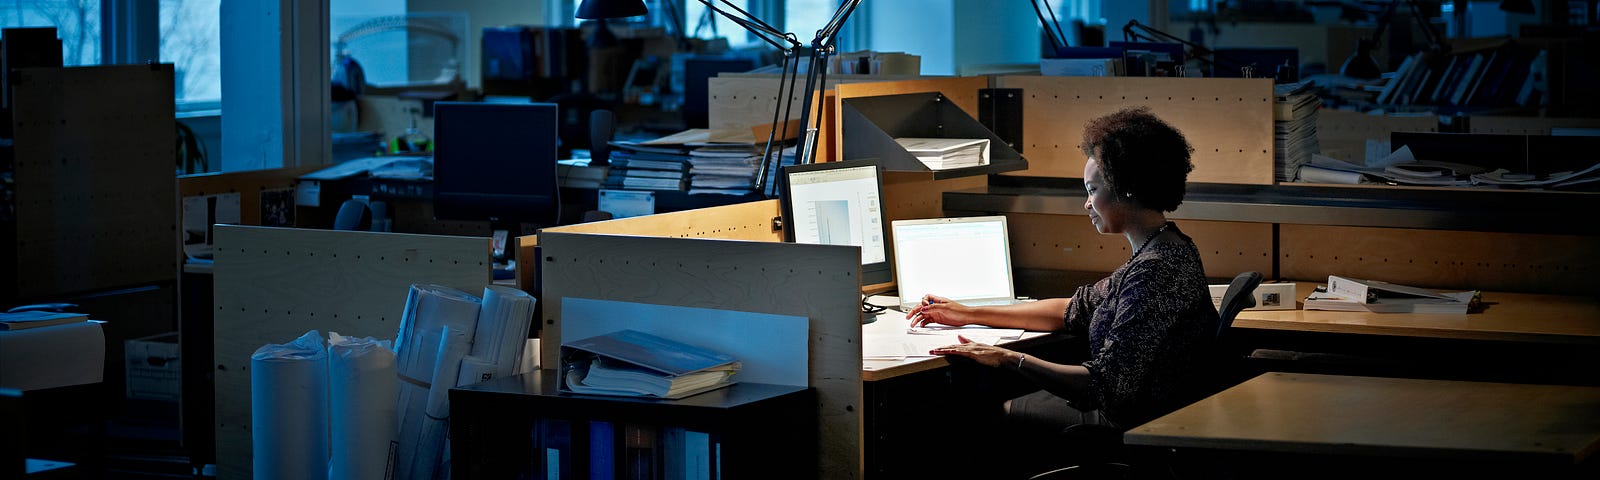 A black woman working alone in a dark office